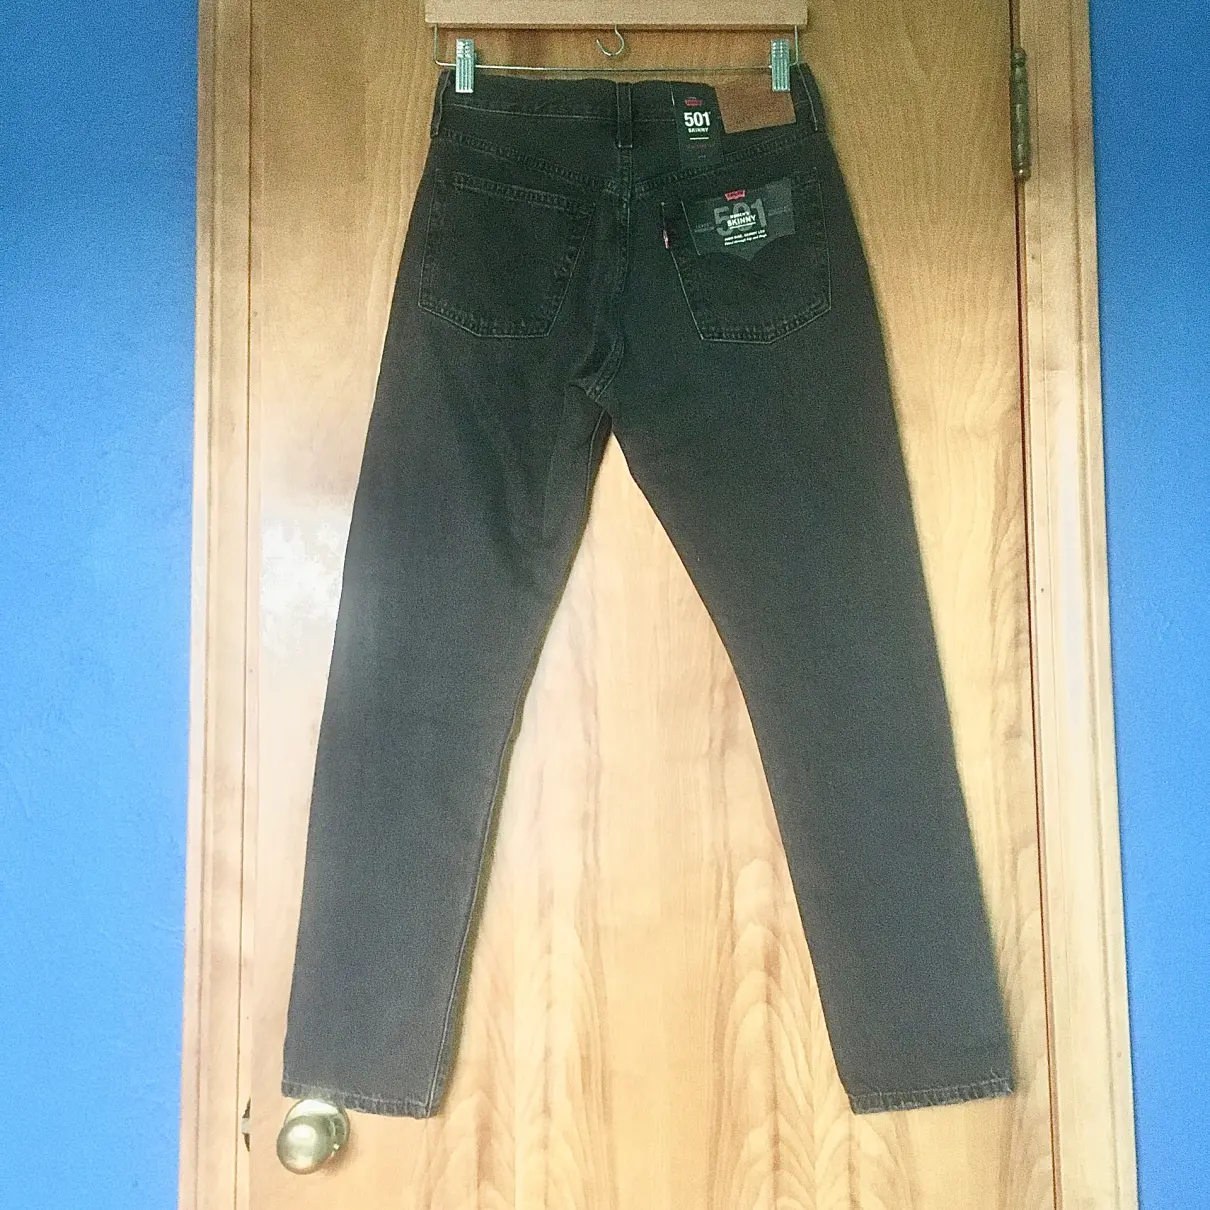 Buy Levi's 501 slim jeans online